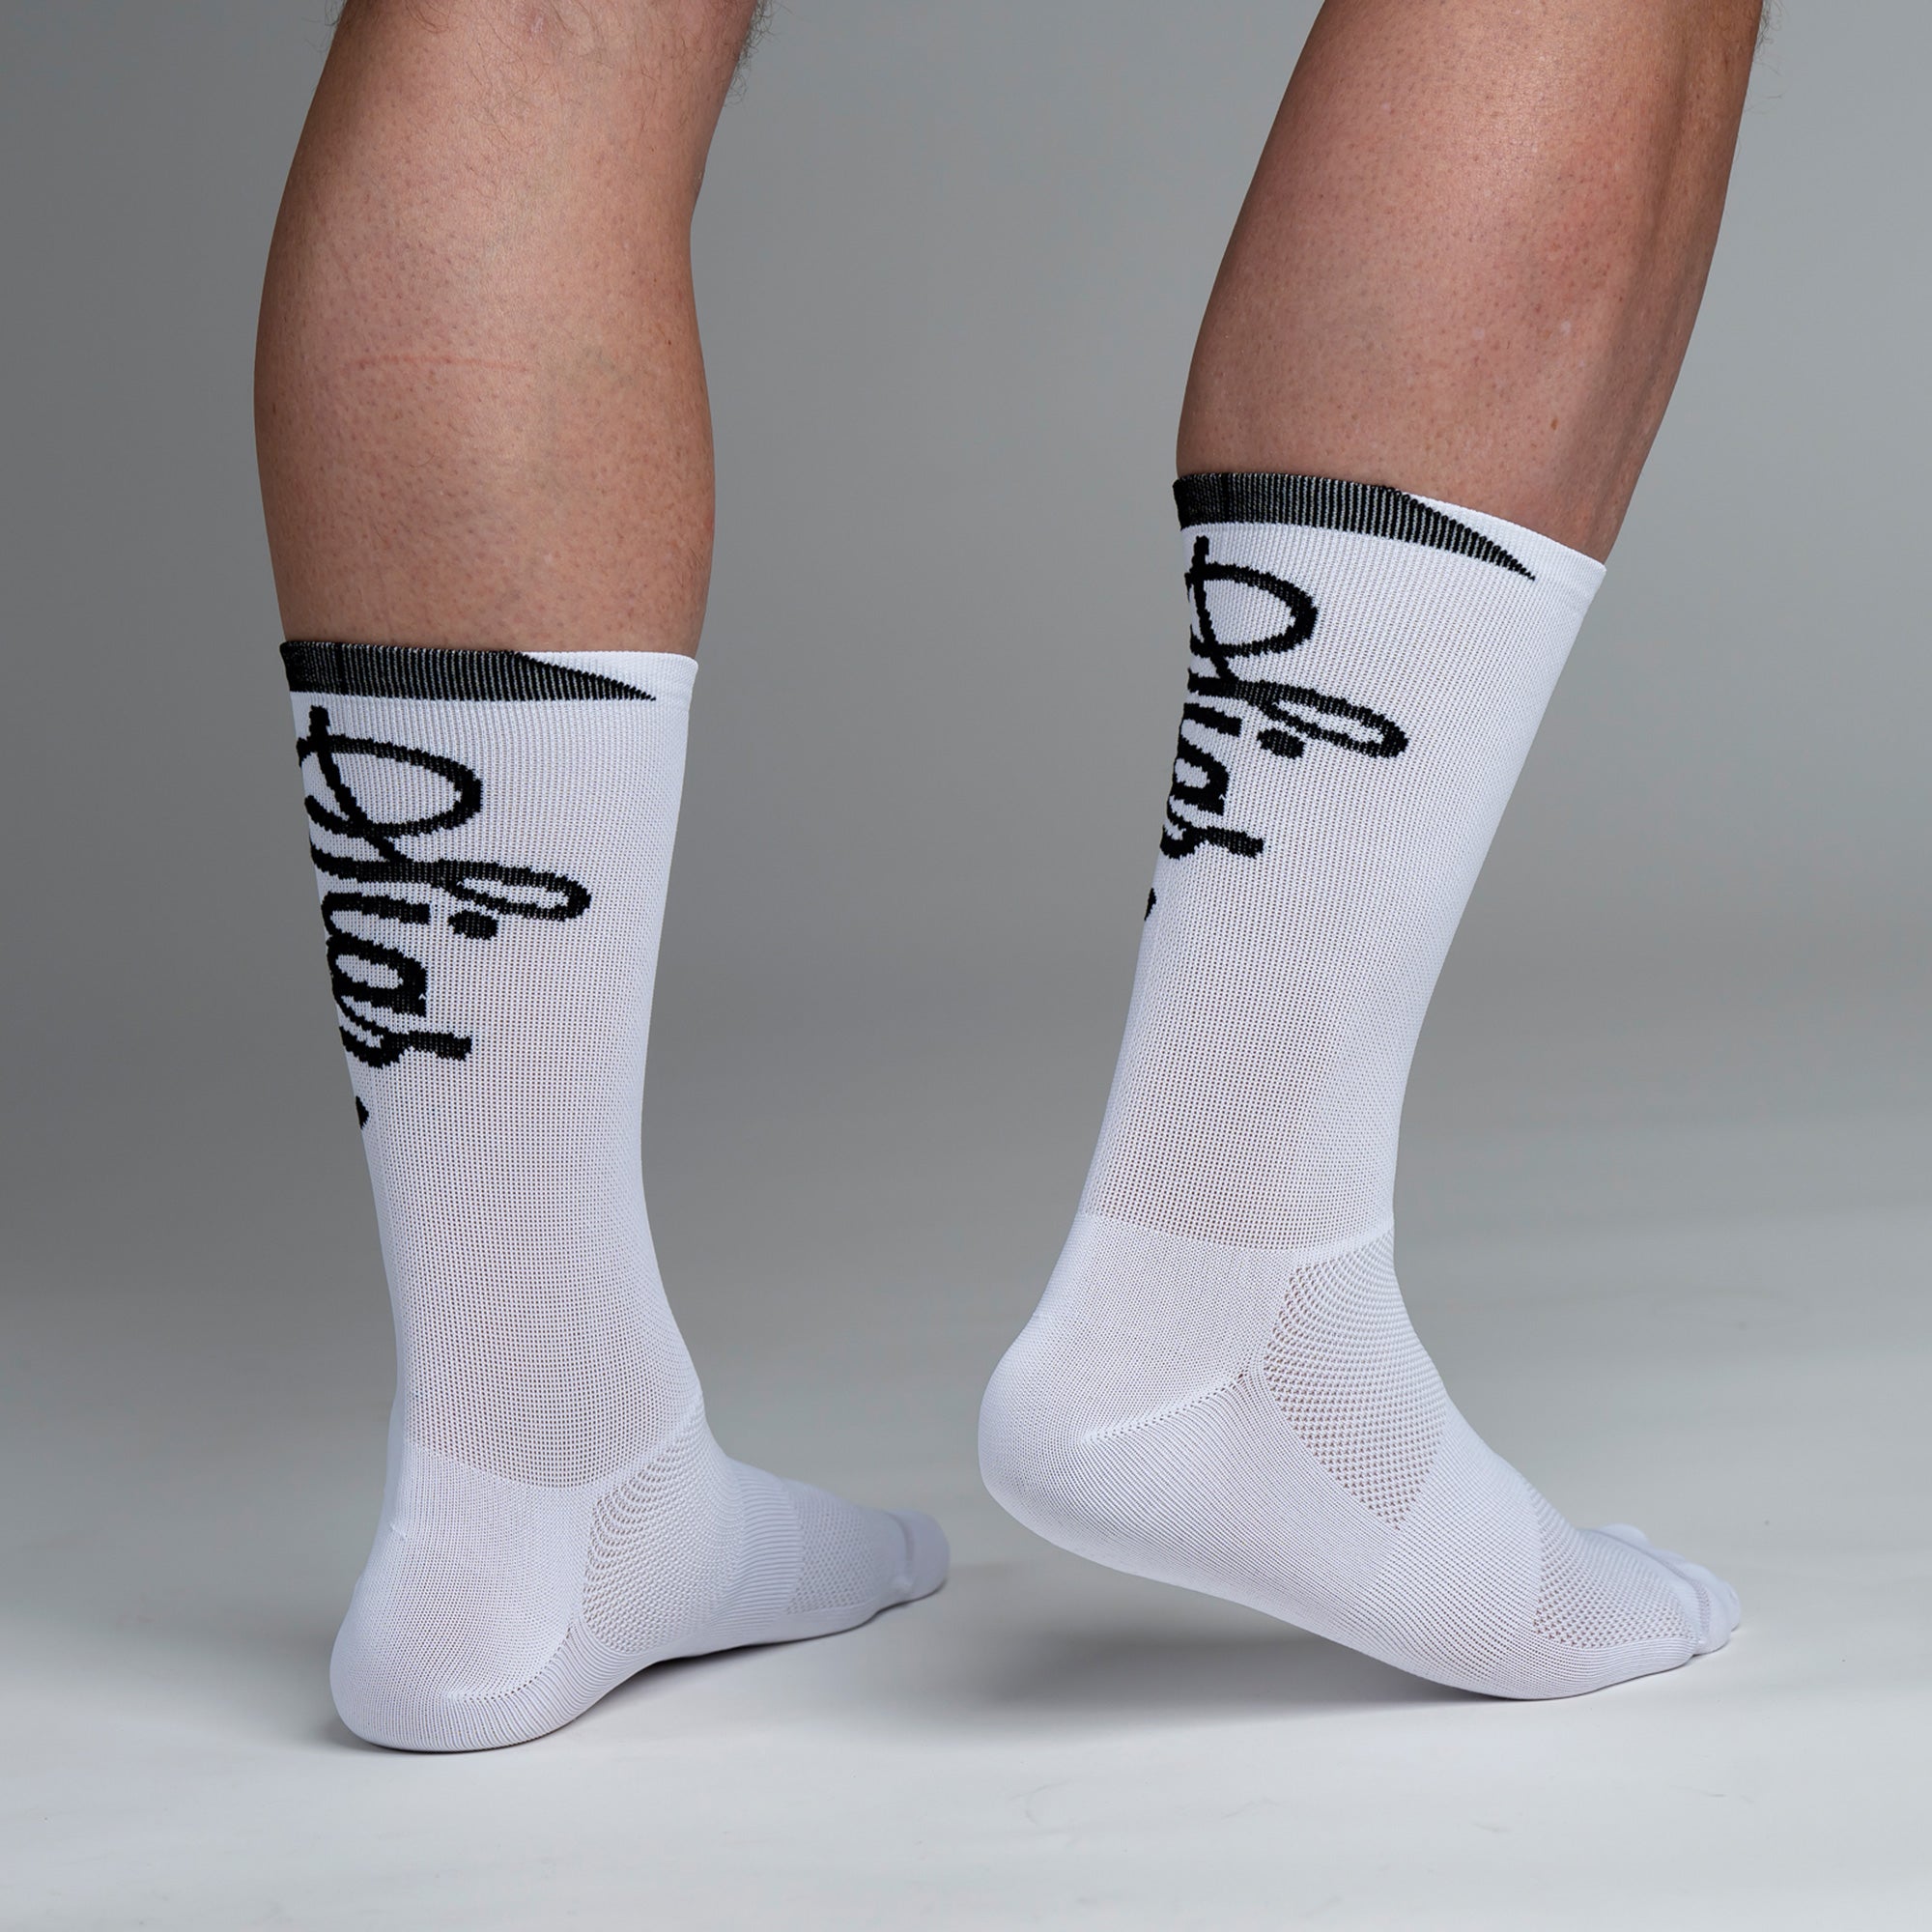 Snok - Larger Logo White Road Cycling Socks for Men - Pack of 2 pairs